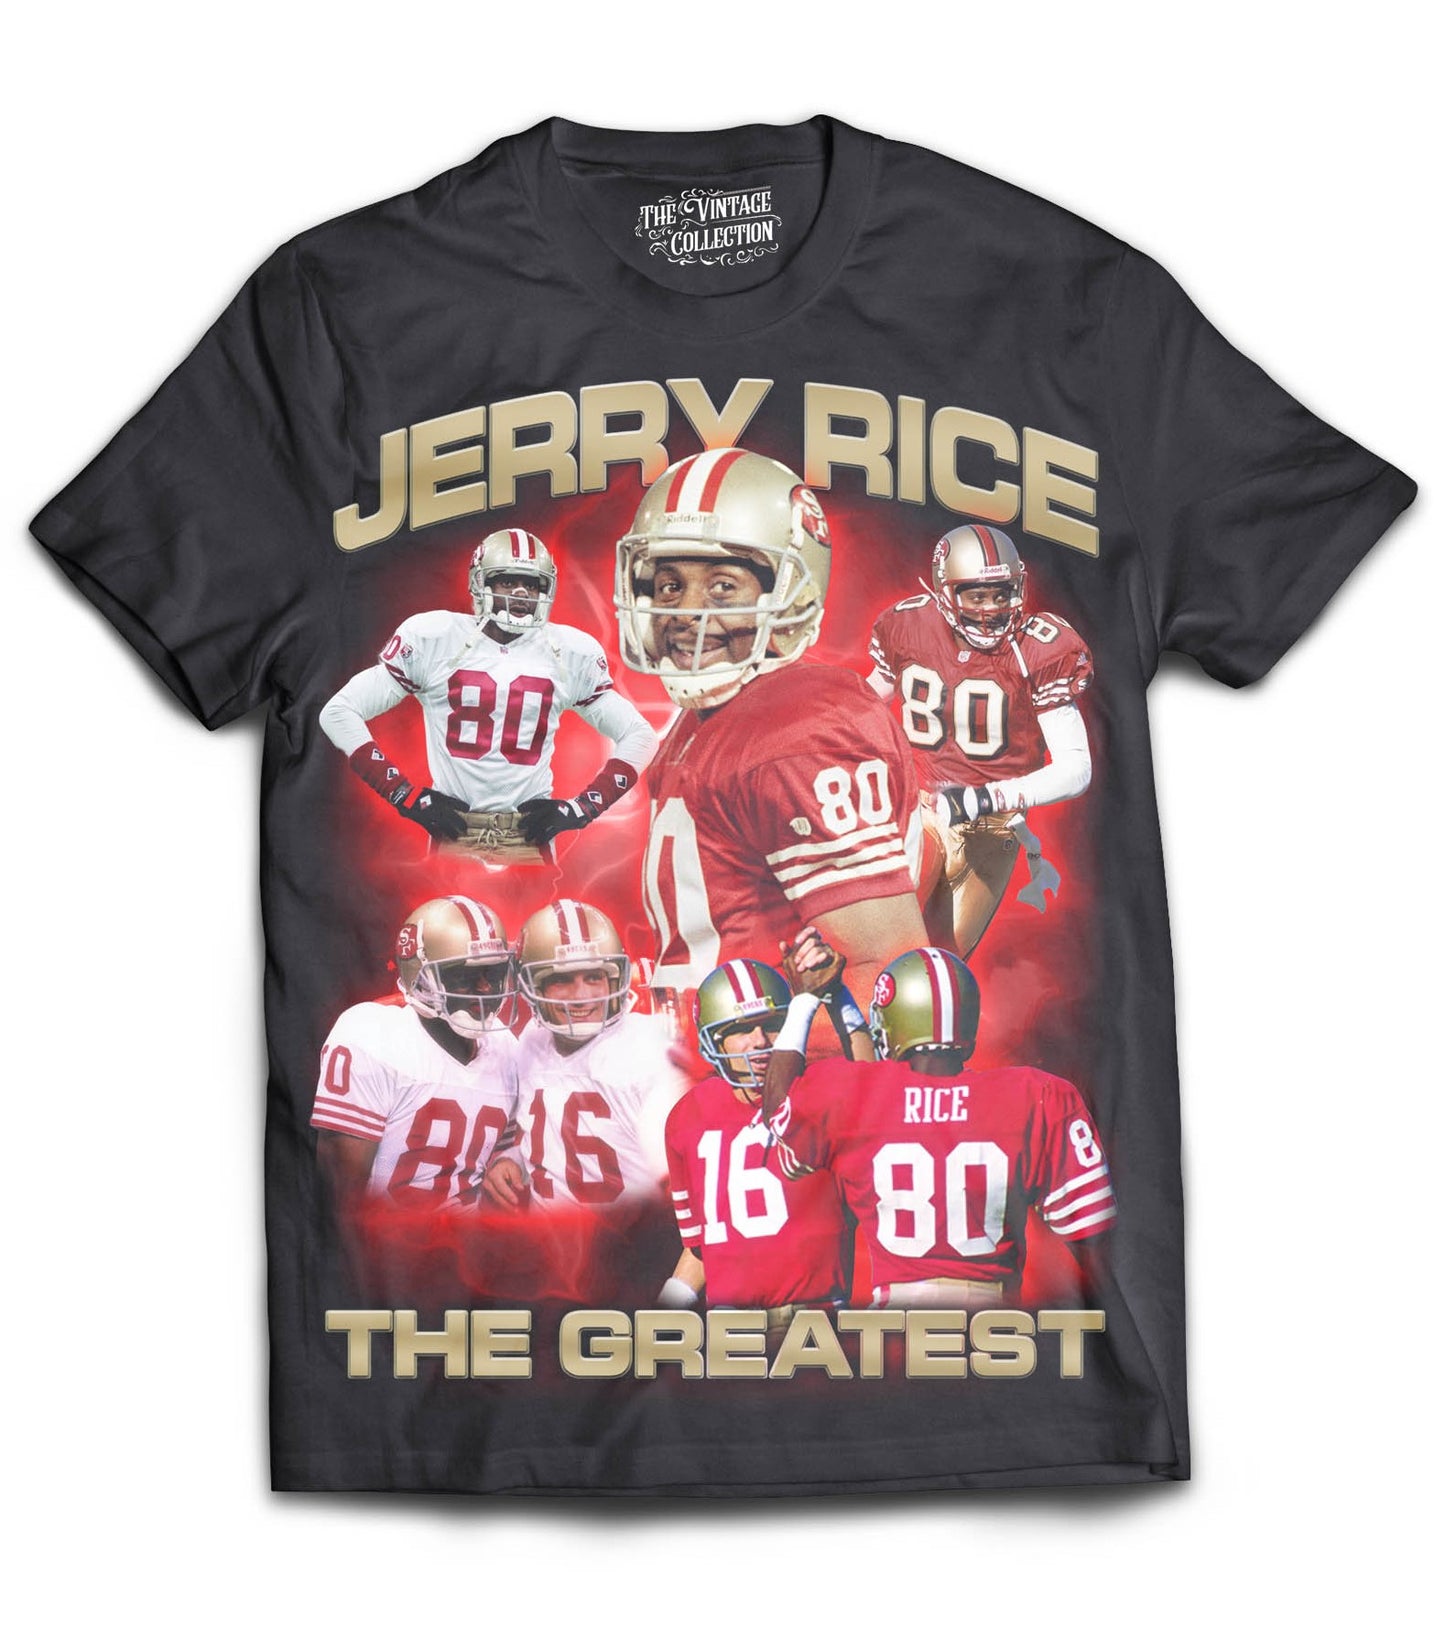 Jerry Rice Tribute Shirt (Black)